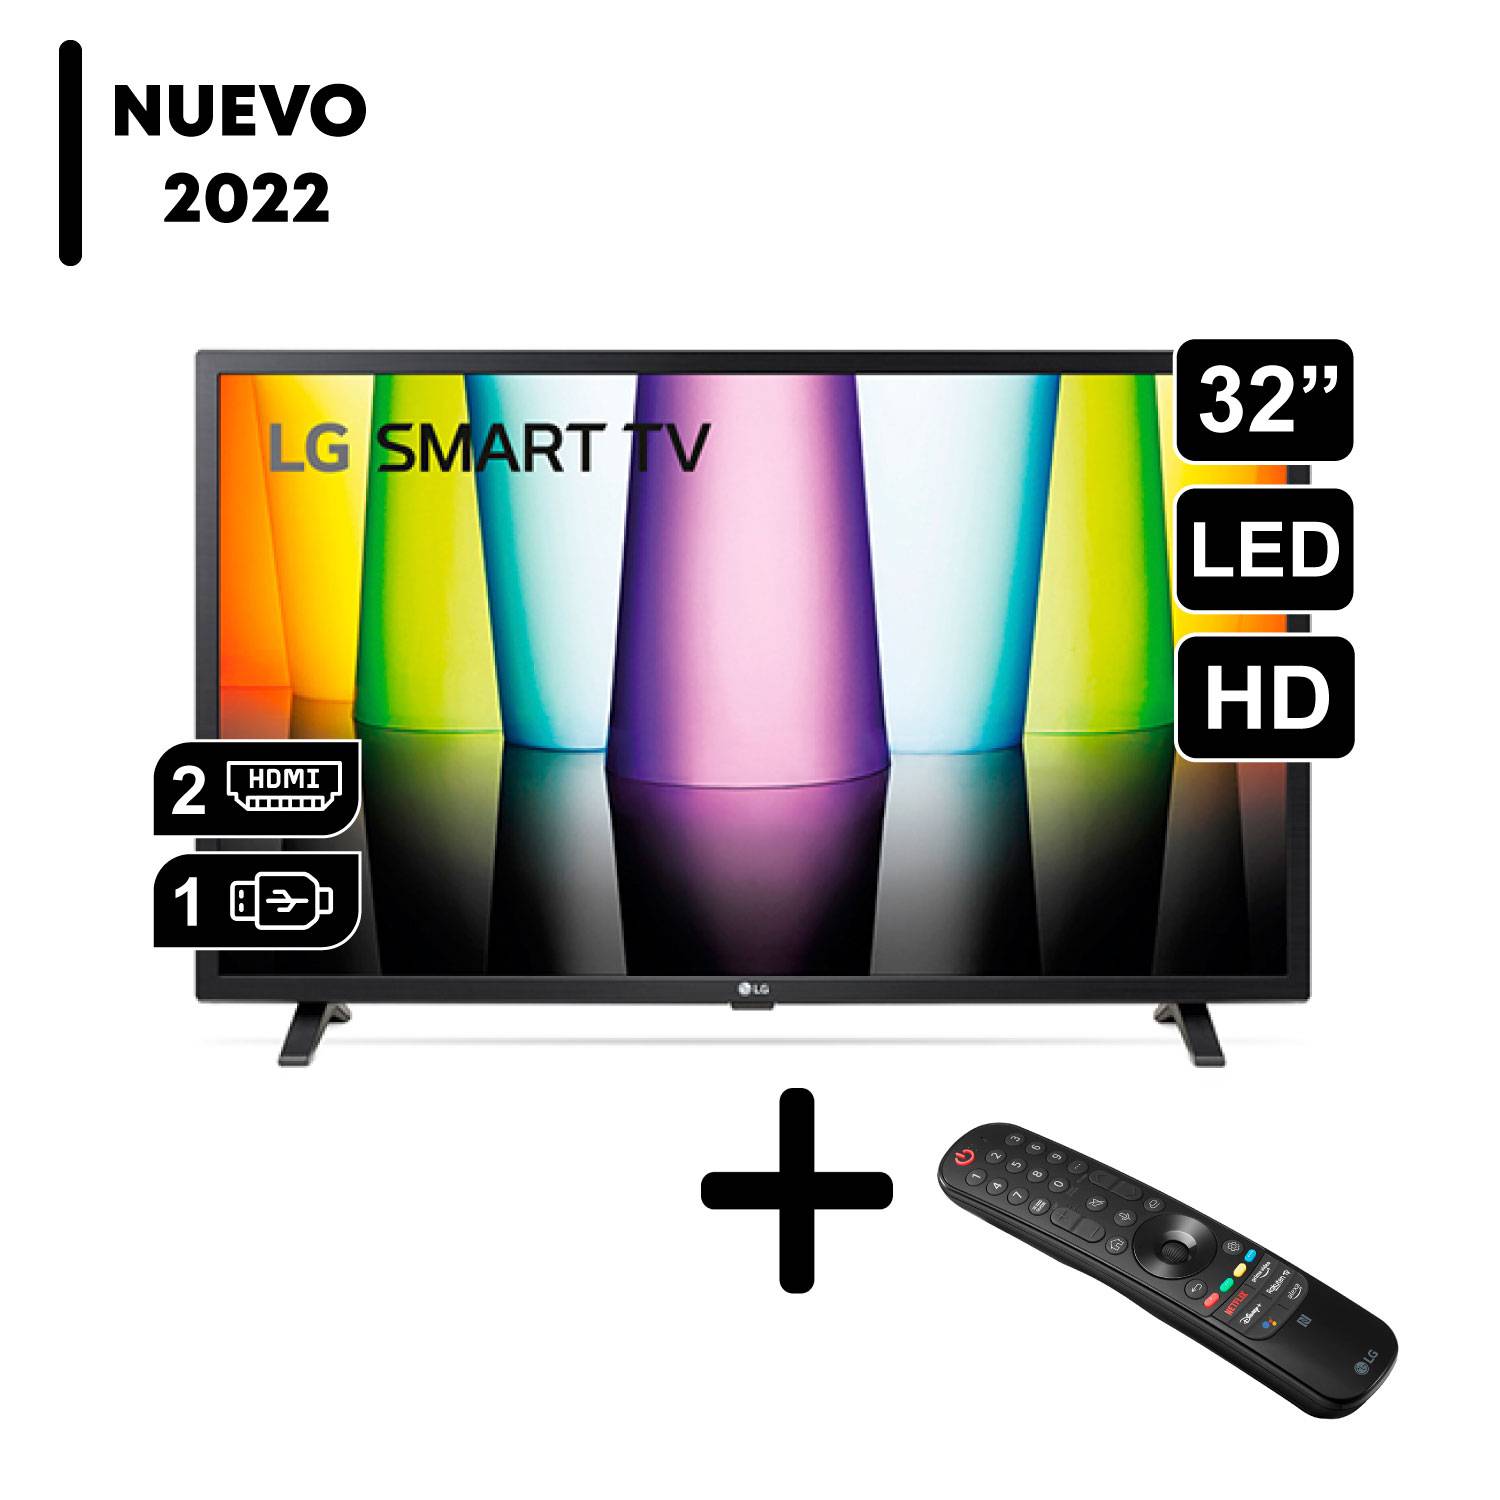 Lg televisor led 32 hd smart tv 2022 32lq630bpsa + control magic